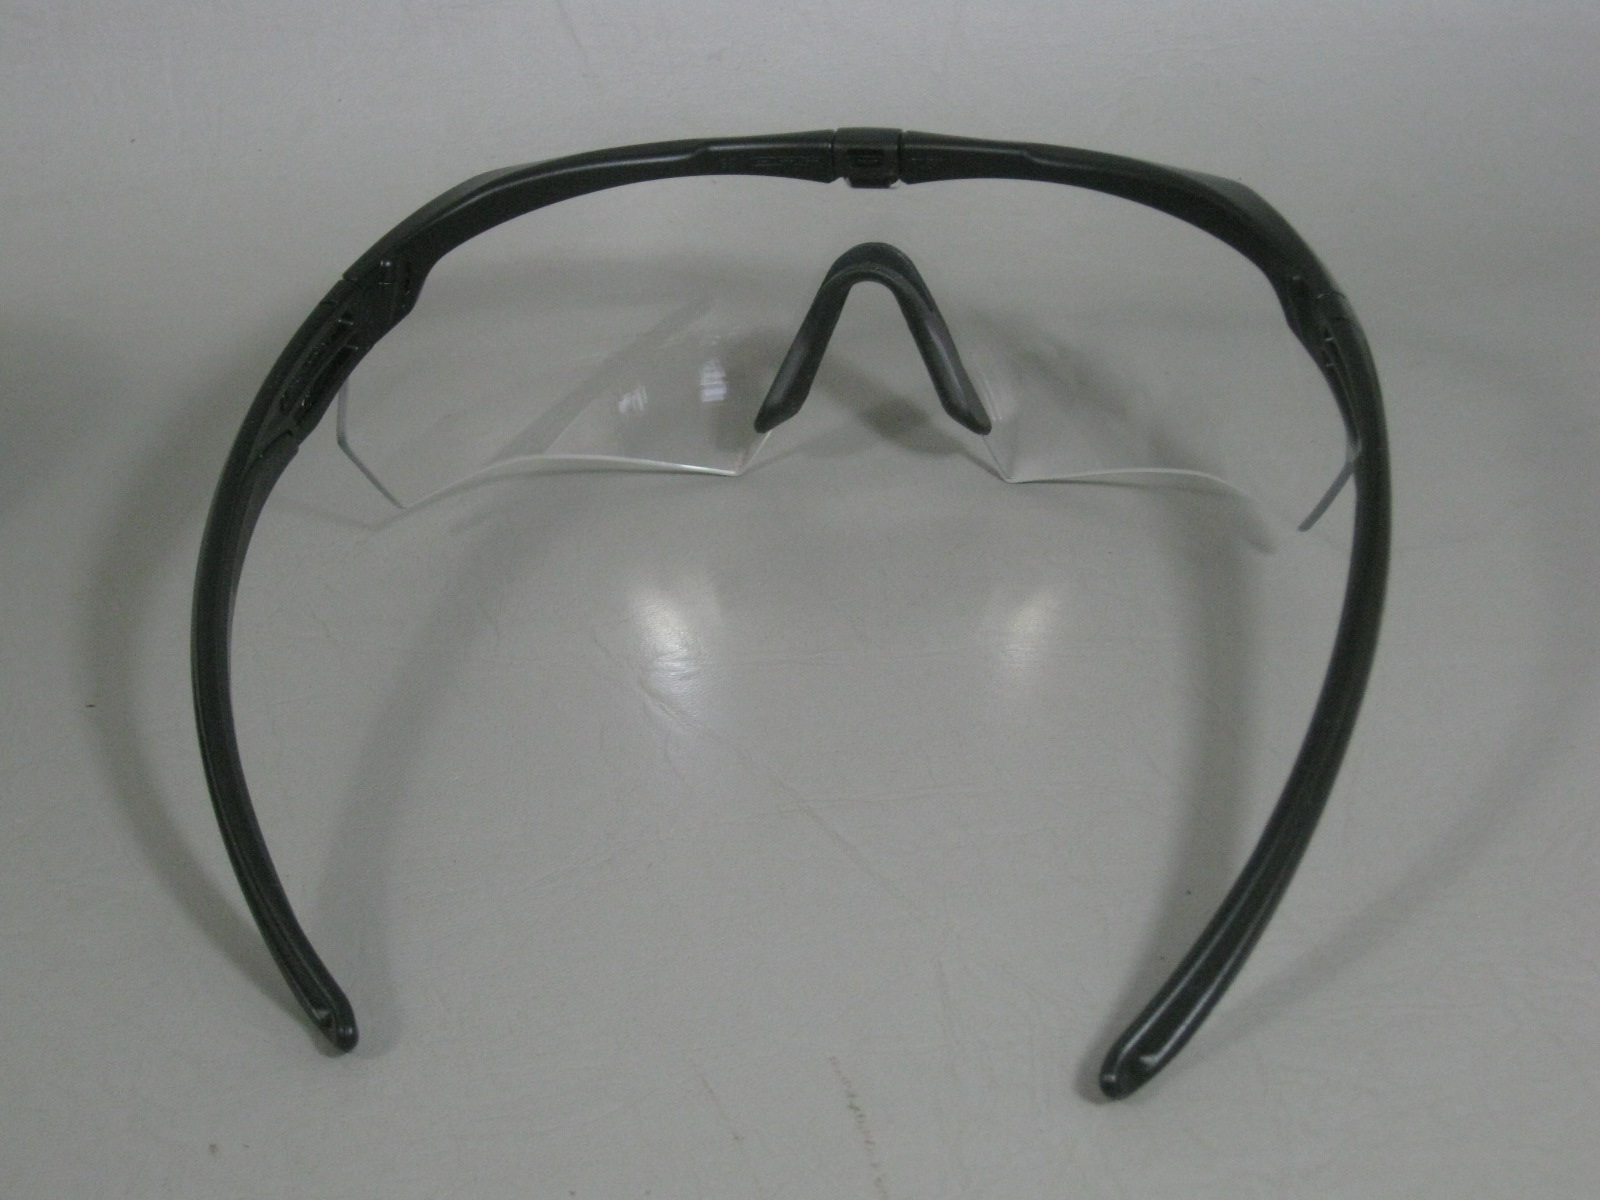 New ESS Crossbow Eyeshield Sunglasses 2 Lenses W/Case Military Law Enforcement 2